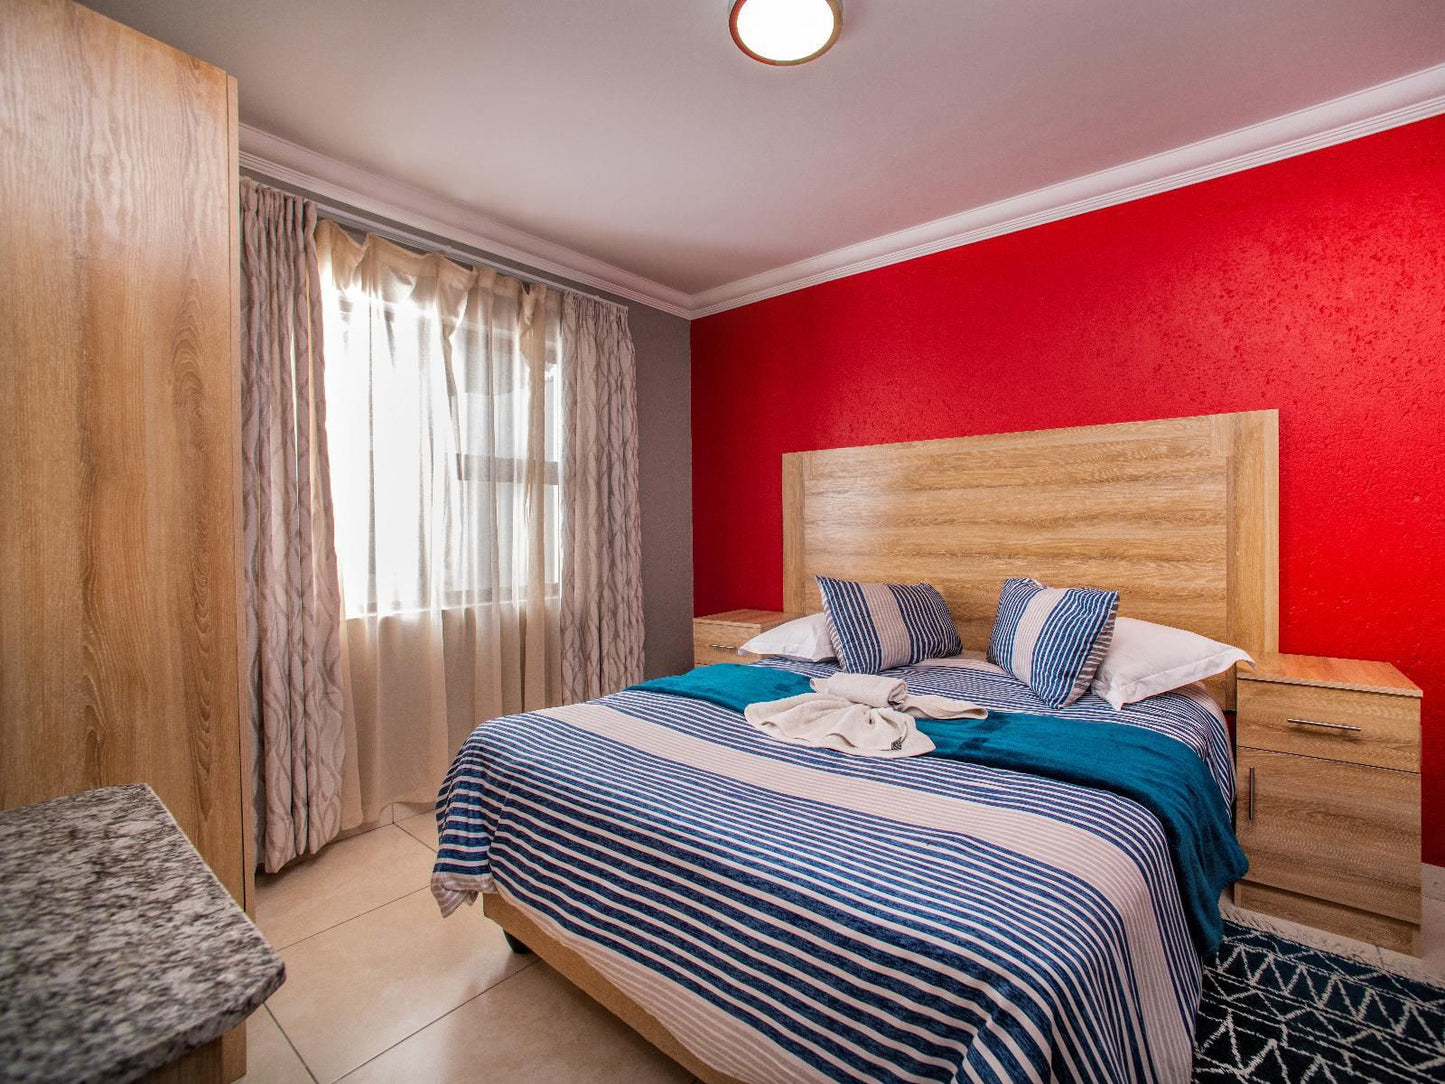 Khayalami Hotels Standerton Standerton Mpumalanga South Africa Bedroom